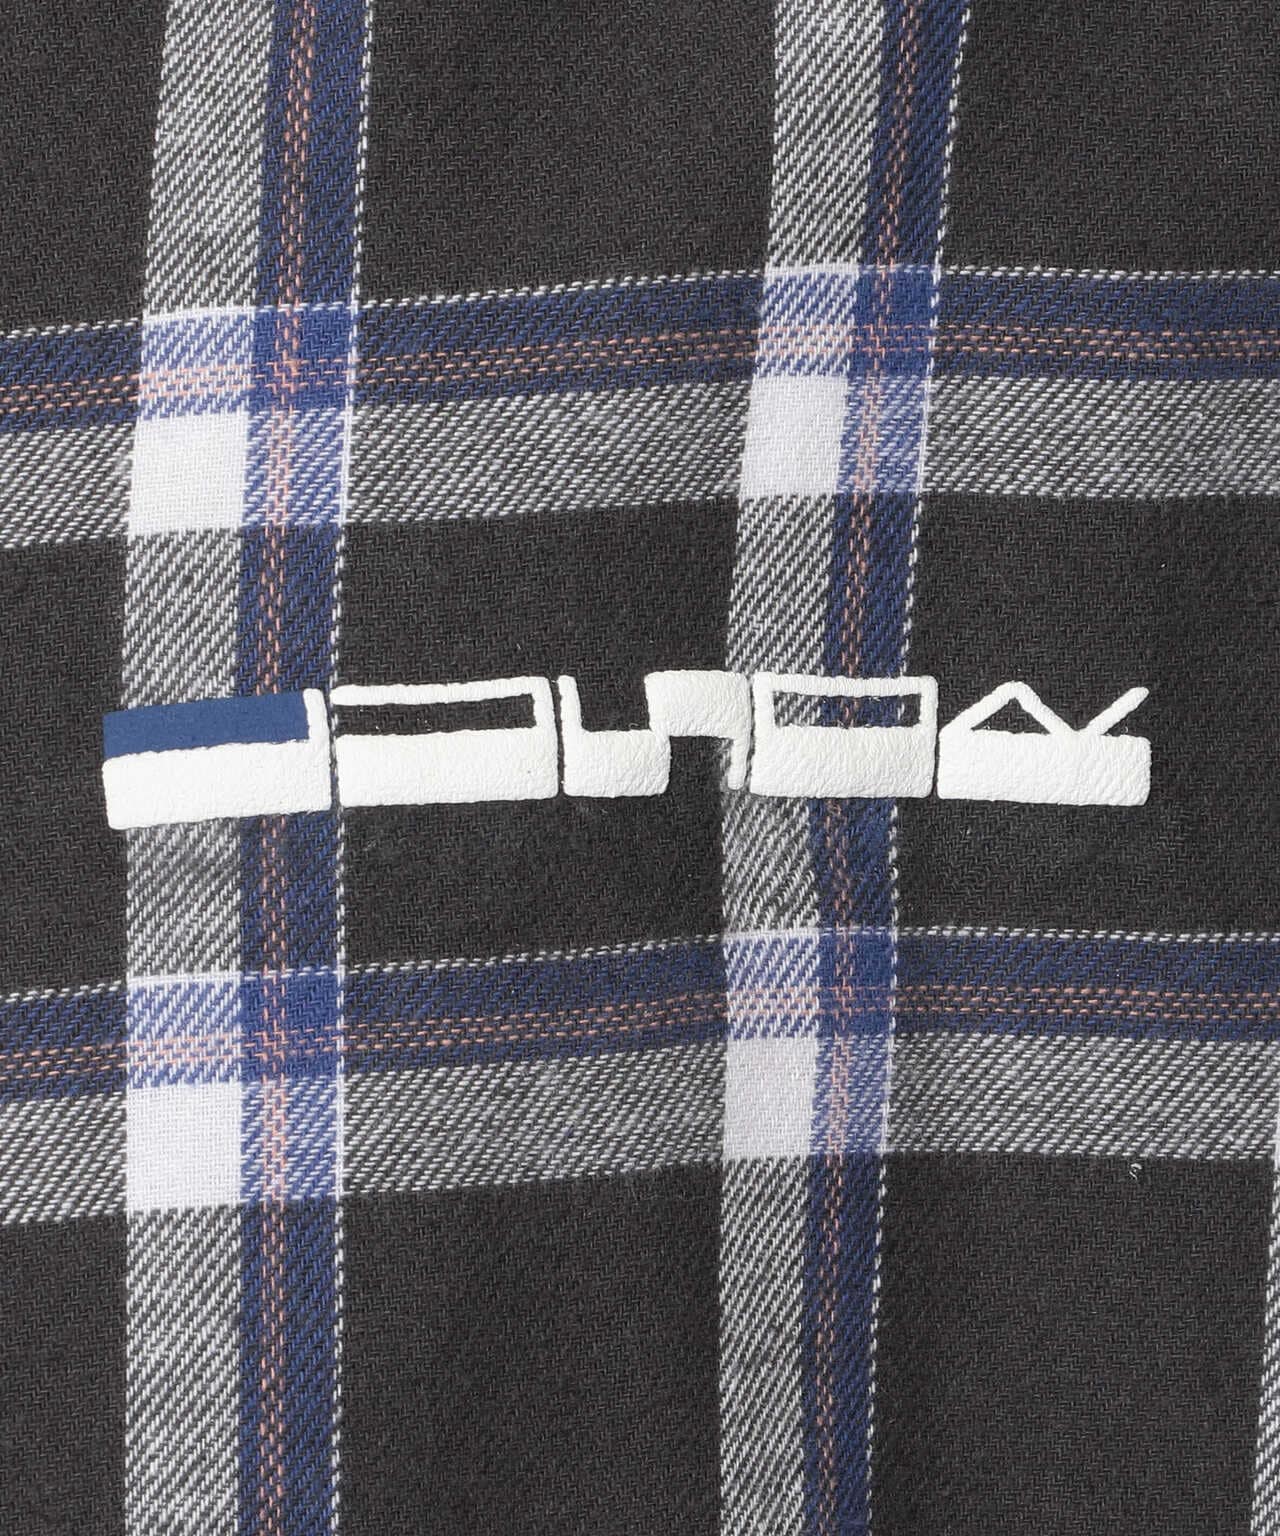 LUSOR（ルーソル）BLINDHOOK SHIRTSブラインドフックシャツ